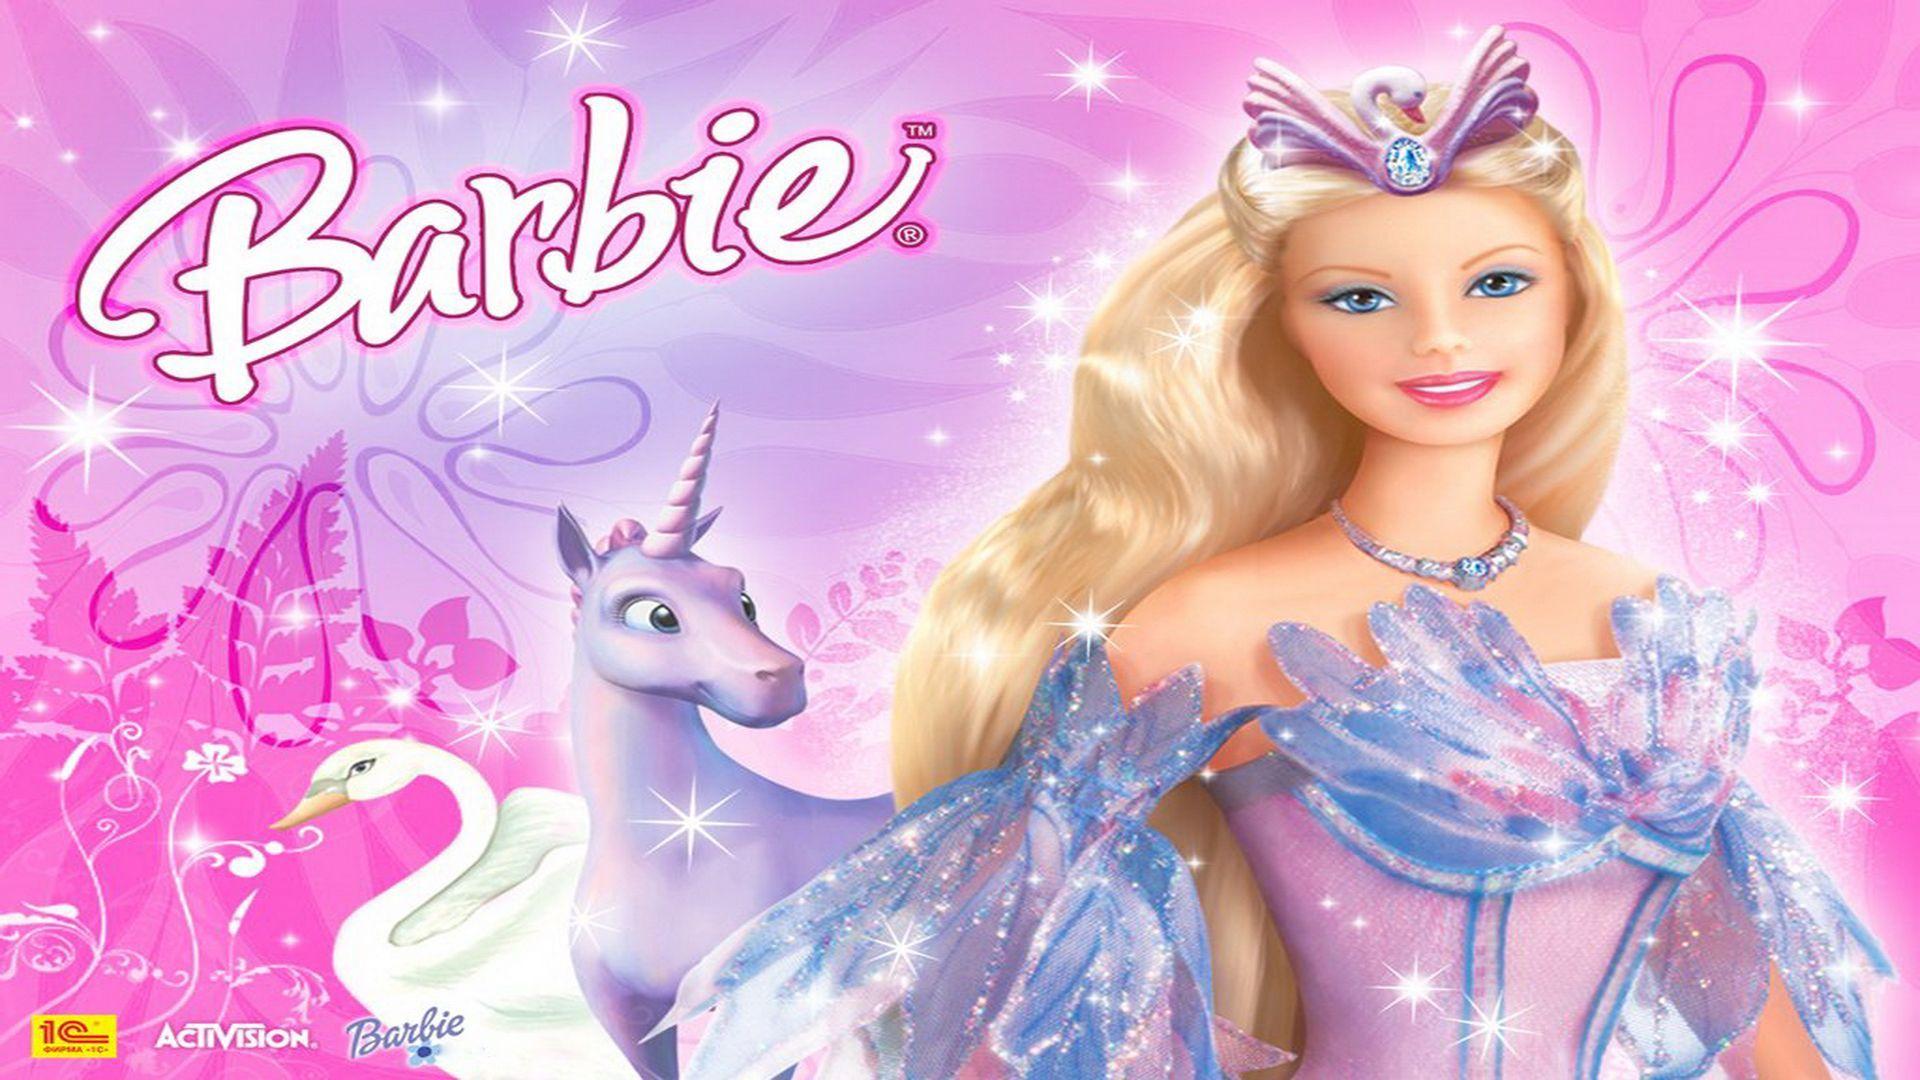 Barbie Wallpaper HD. Wallpaper, Background, Image, Art Photo